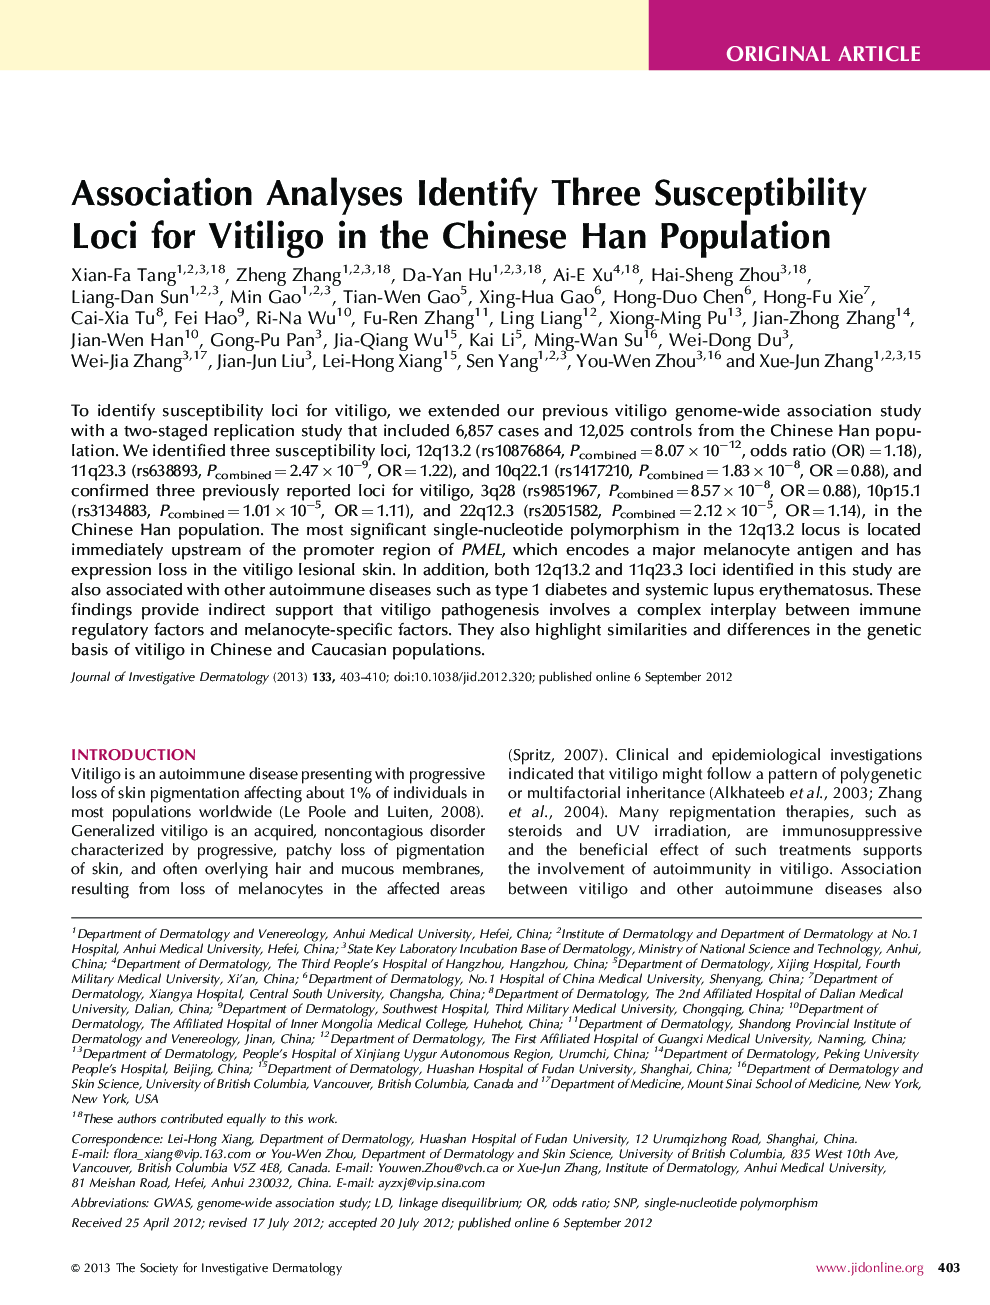 Original ArticleAssociation Analyses Identify Three Susceptibility Loci for Vitiligo in the Chinese Han Population